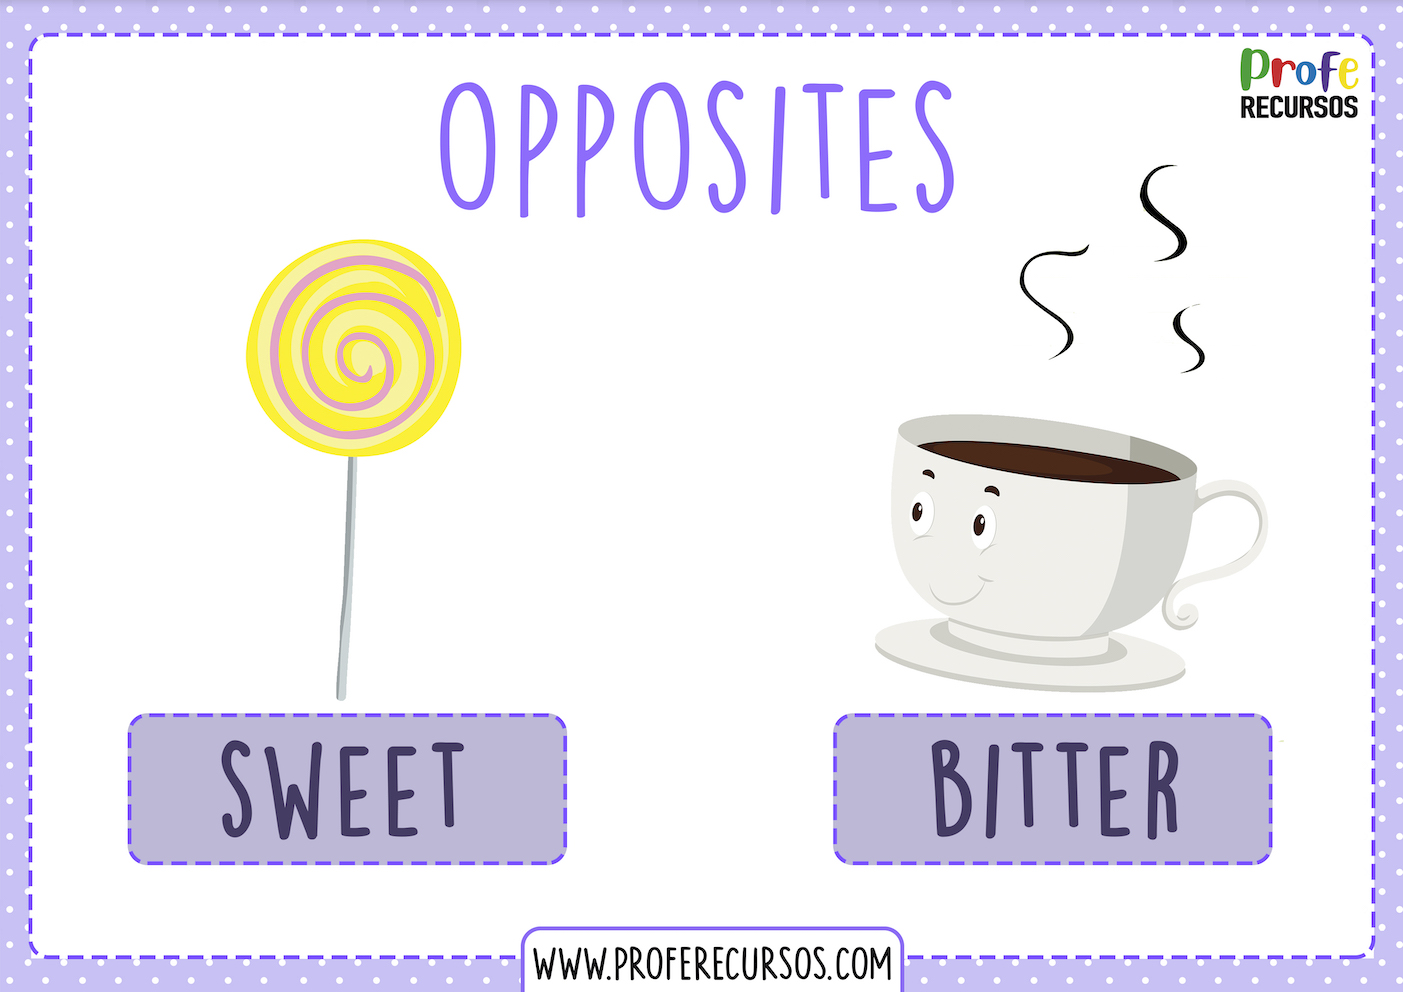 English opposites verbs